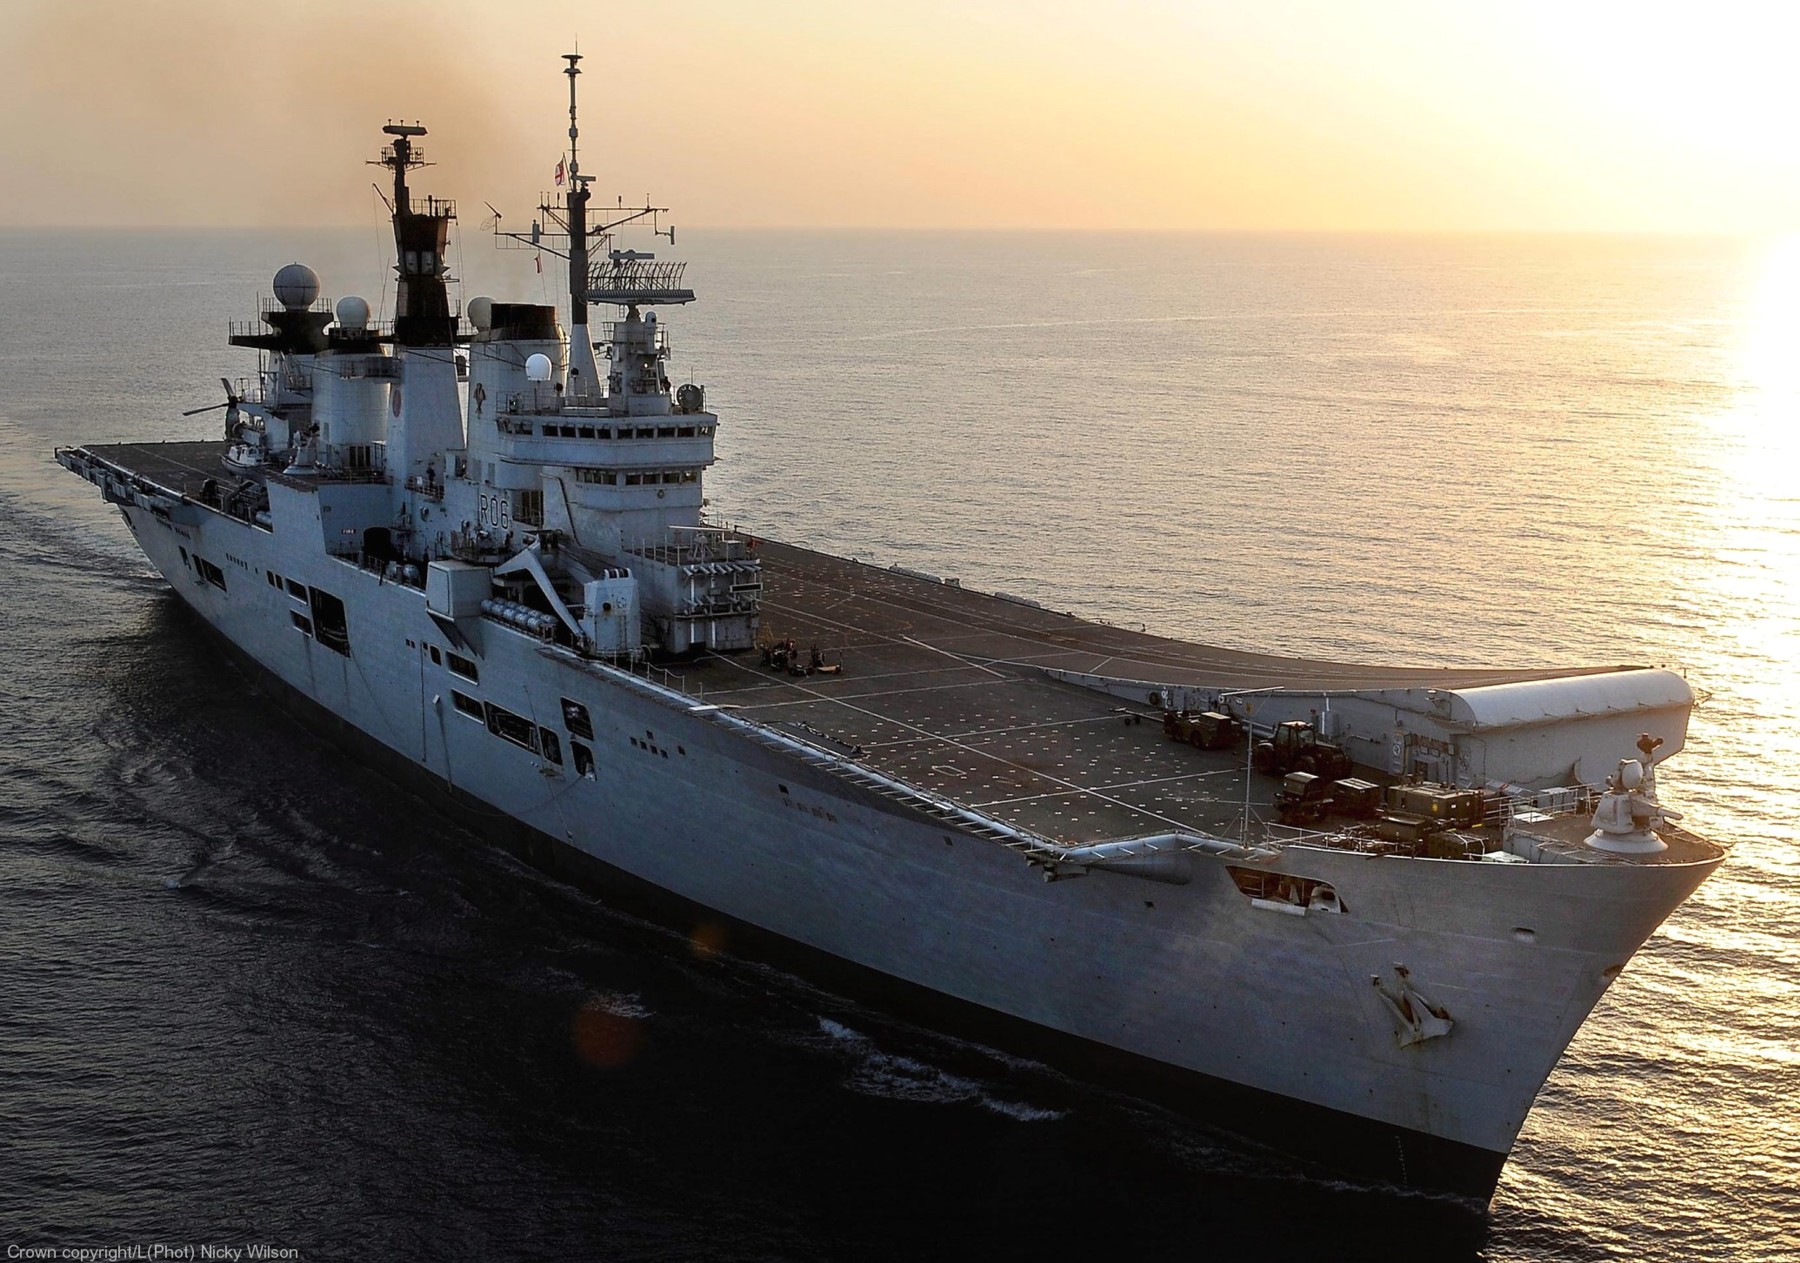 r06 hms illustrious invincible class aircraft carrier royal navy 57